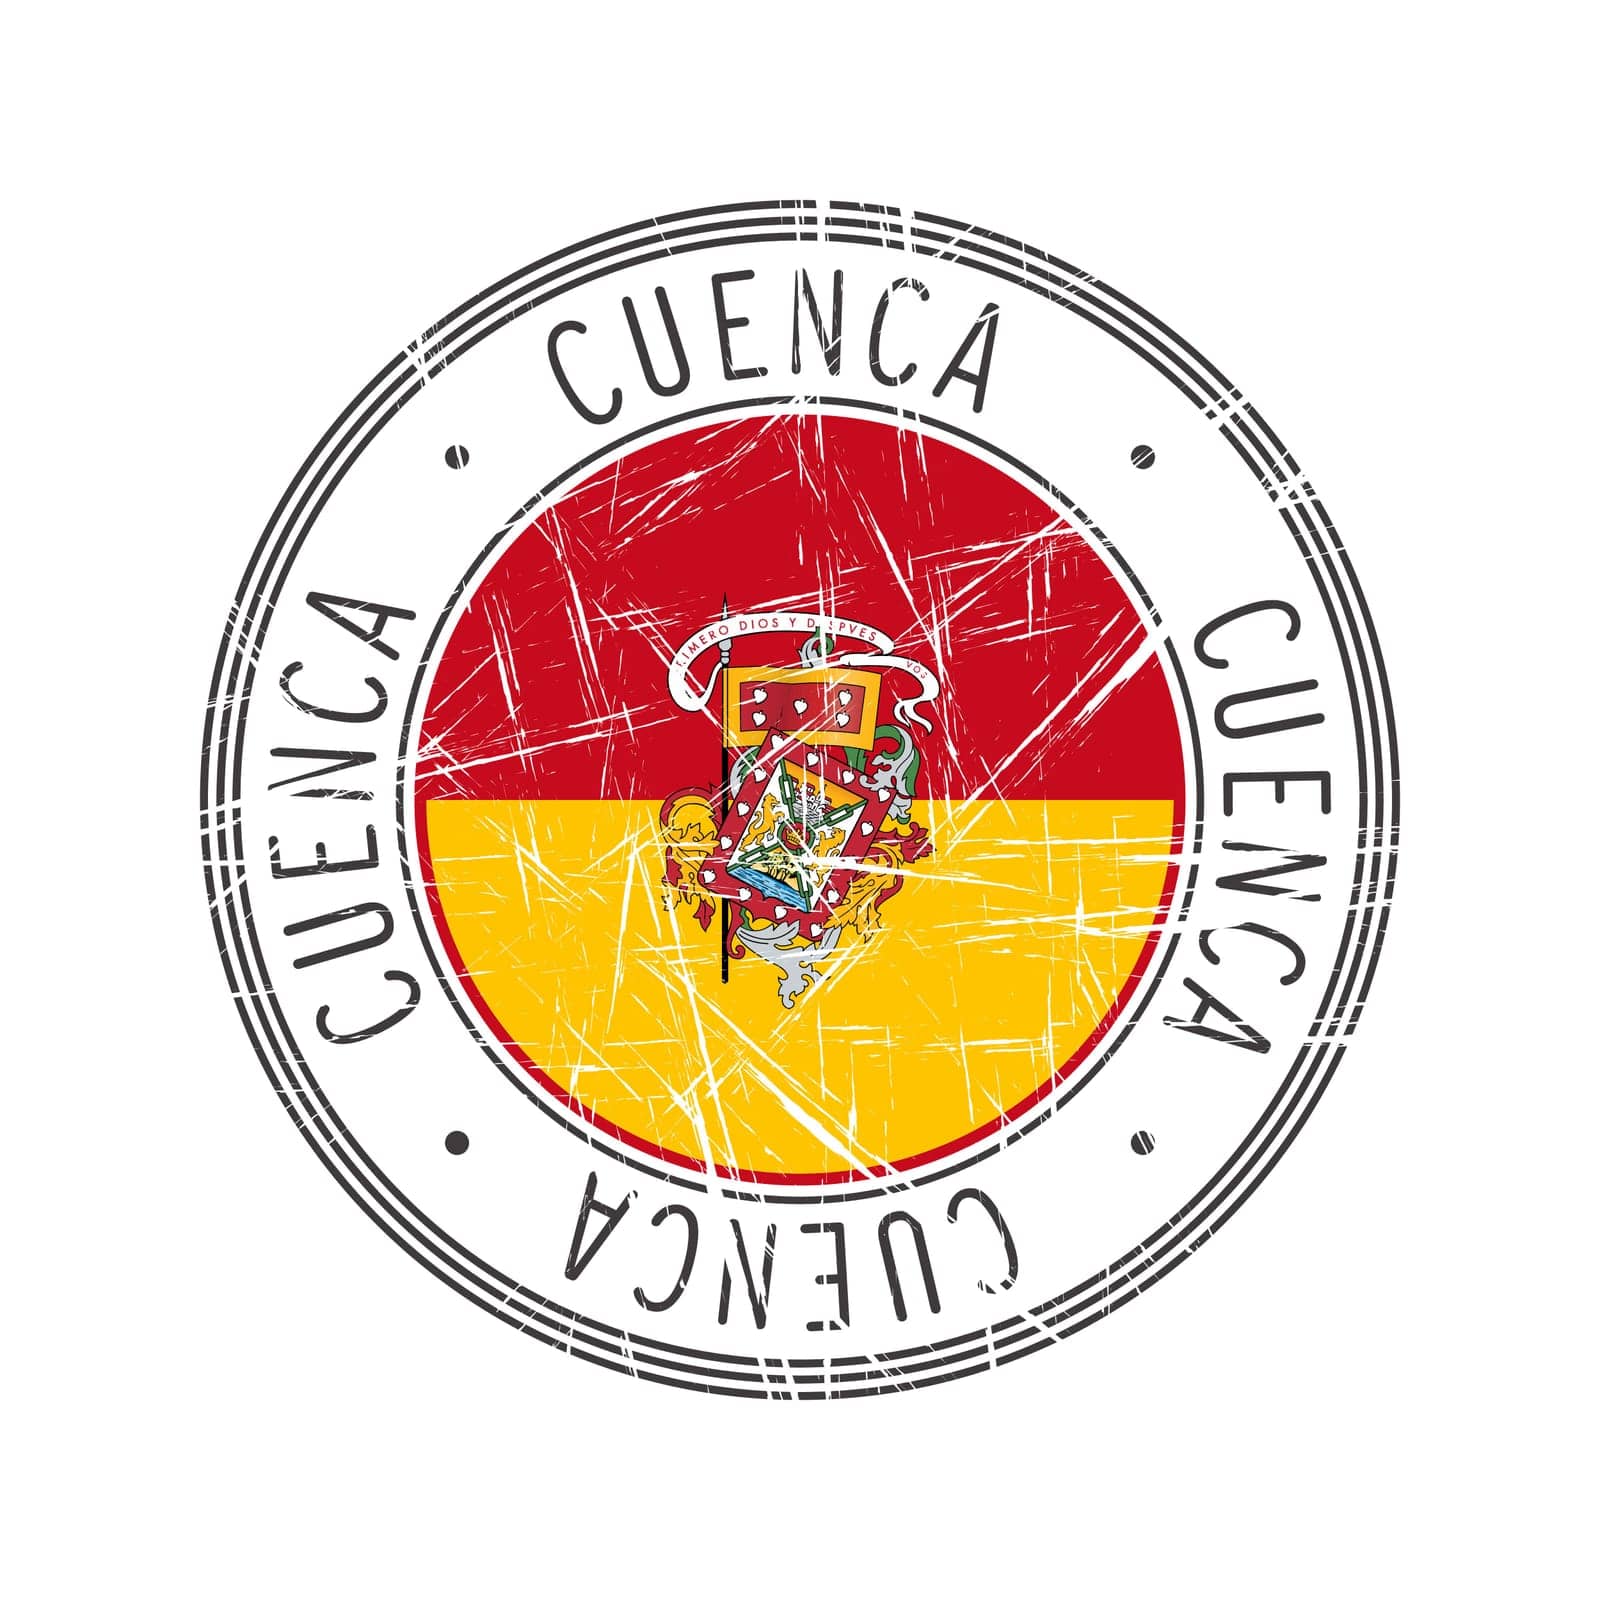 Cuenca city, Ecuador vector rubber stamp over white background